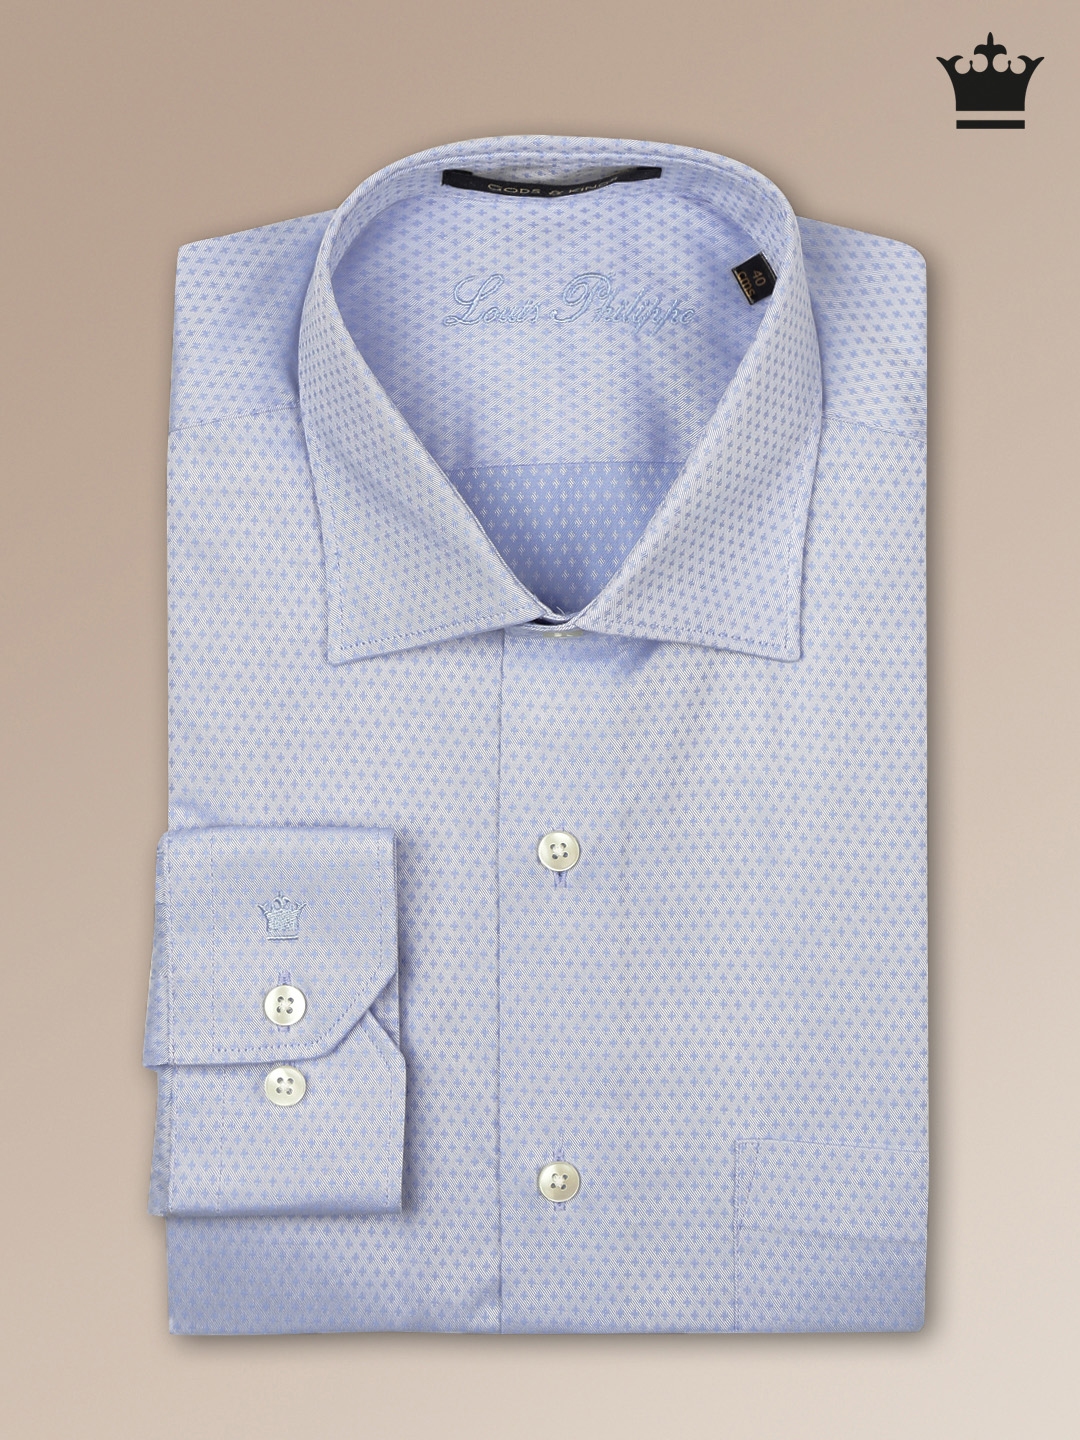 Buy Louis Philippe Blue Shirt Online - 800442